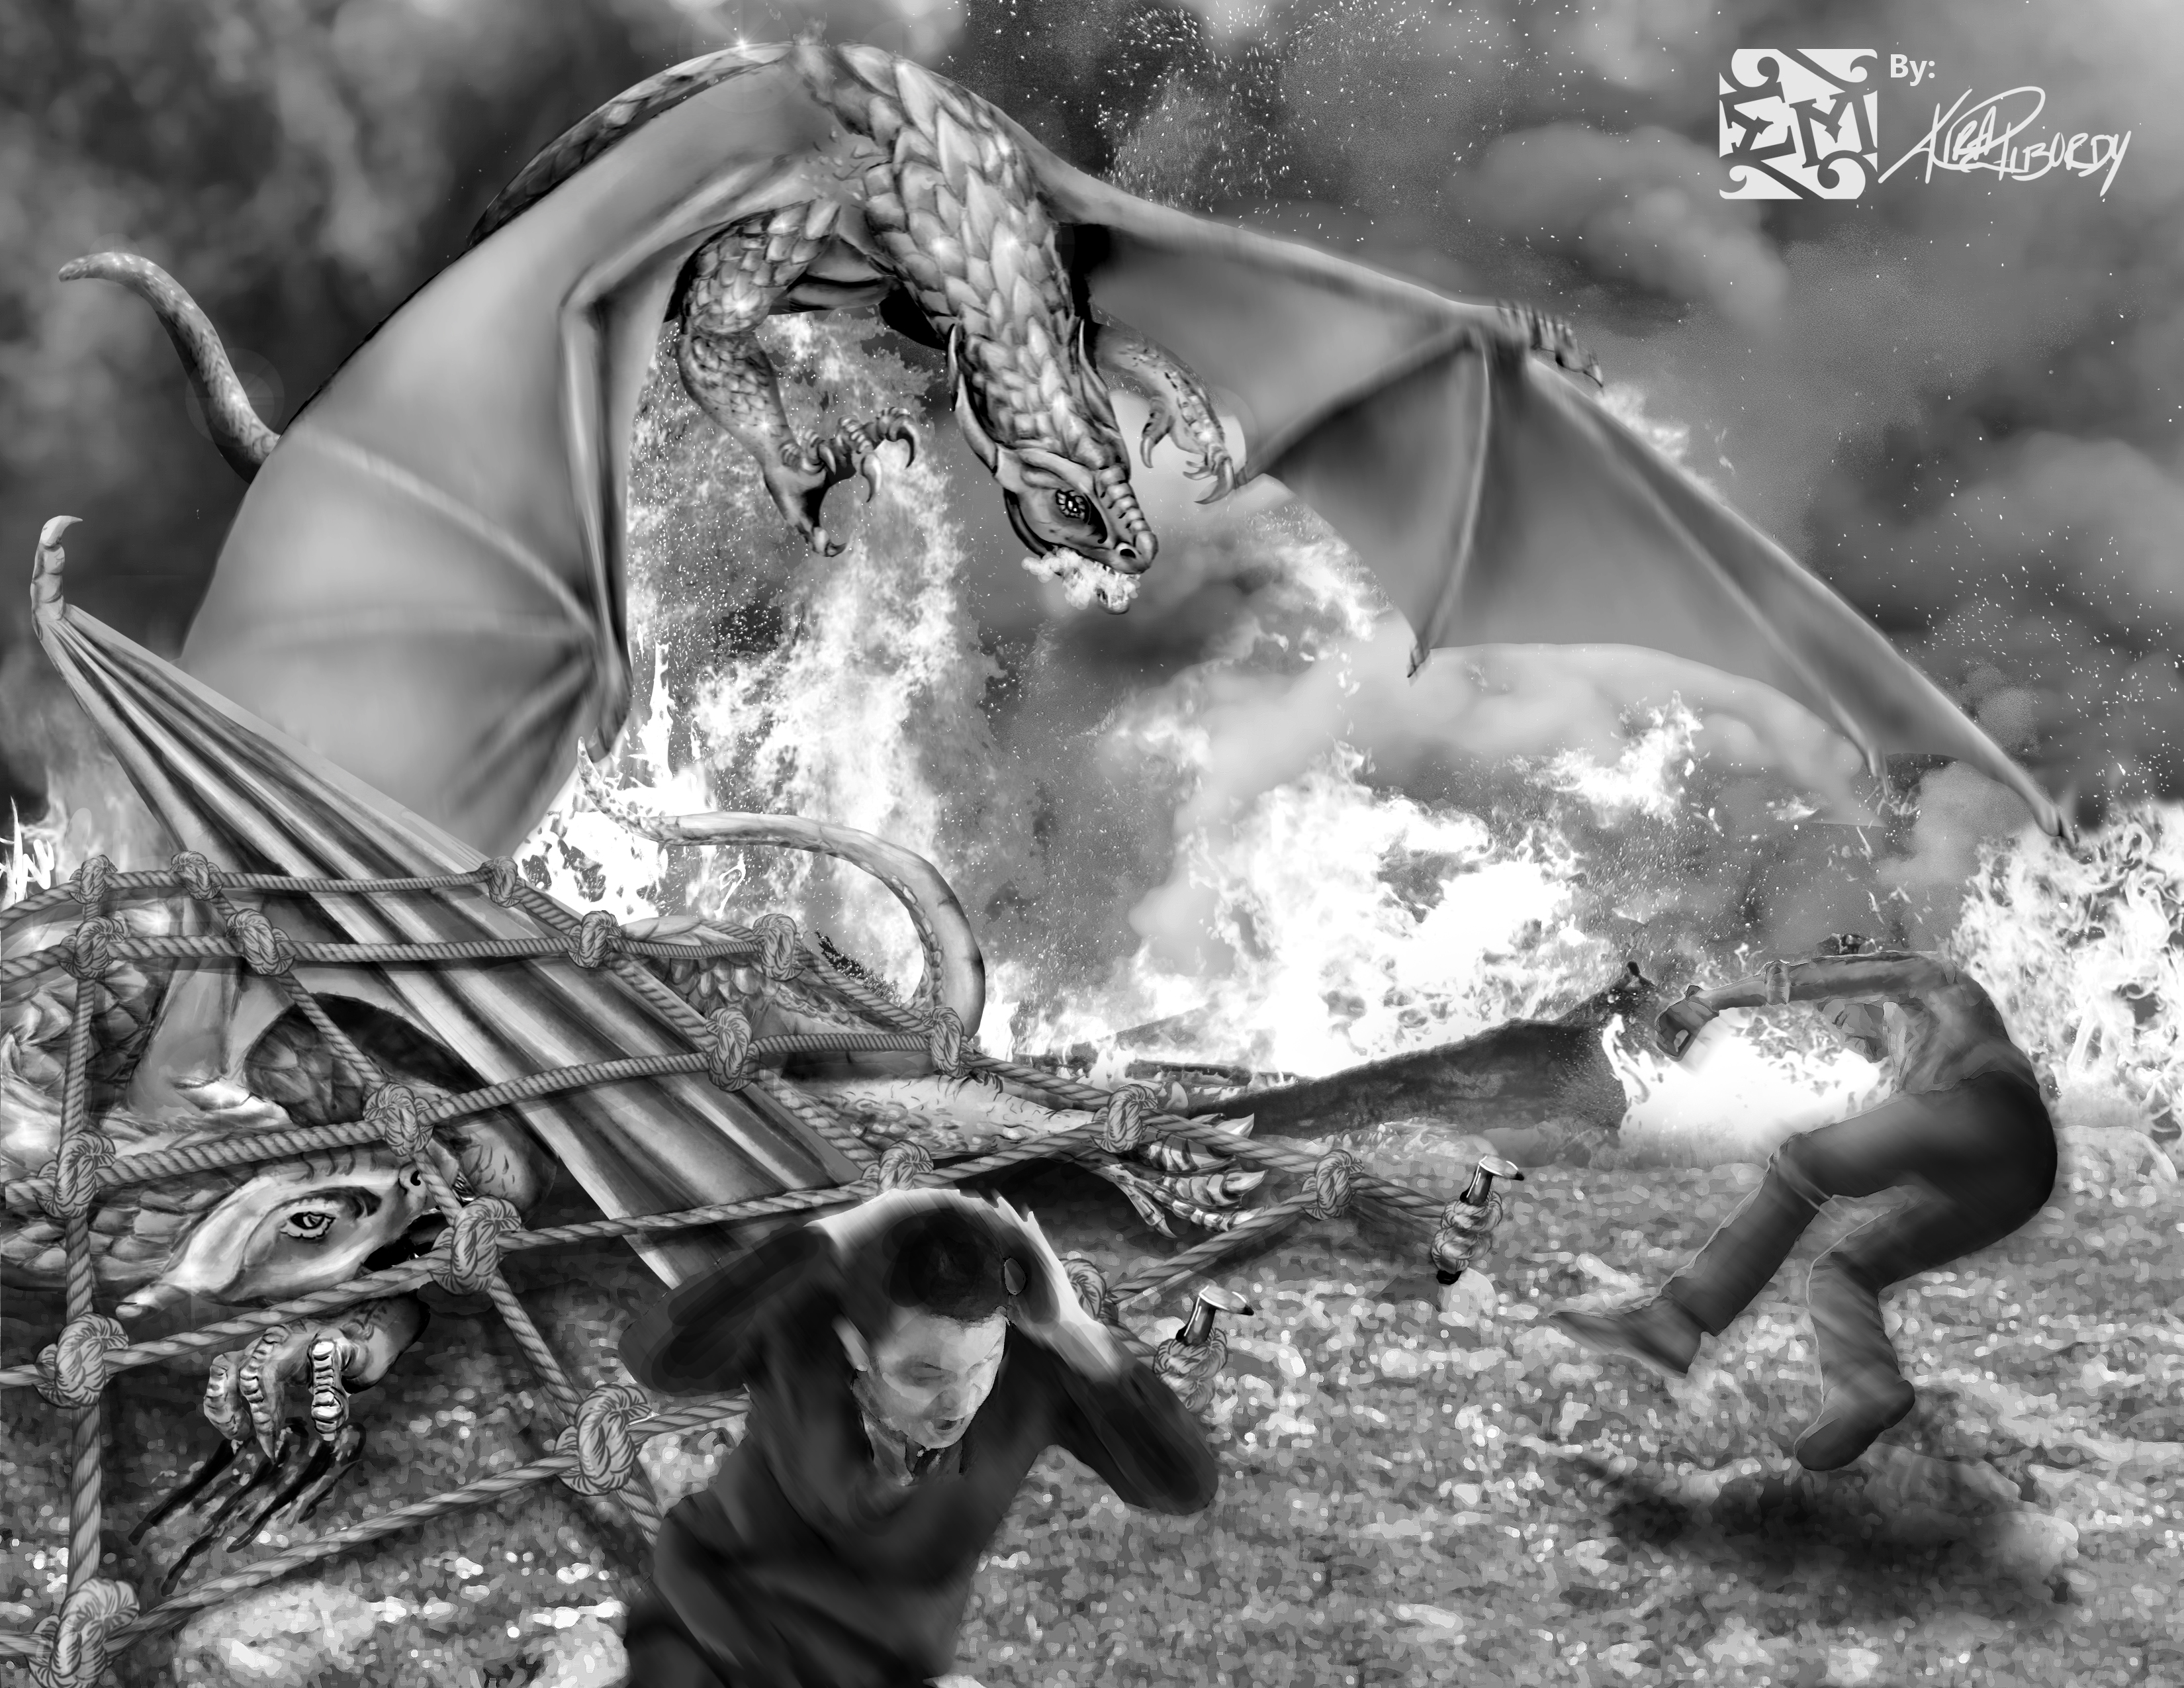 Illus. 2 A Dragon's Wrath